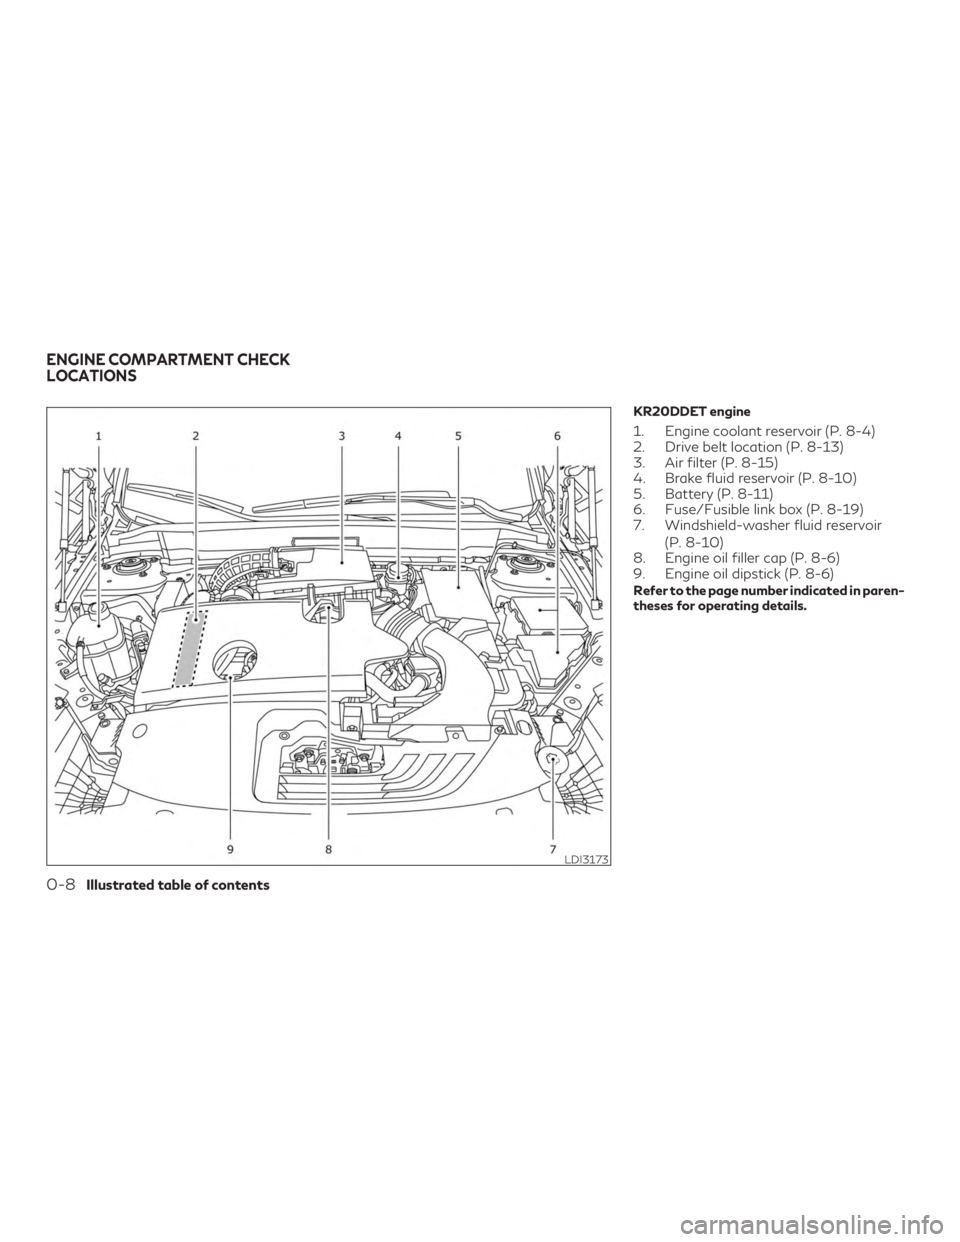 INFINITI QX50 2019  Owners Manual KR20DDET engine
1. Engine coolant reservoir (P. 8-4)
2. Drive belt location (P. 8-13)
3. Air filter (P. 8-15)
4. Brake fluid reservoir (P. 8-10)
5. Battery (P. 8-11)
6. Fuse/Fusible link box (P. 8-19)